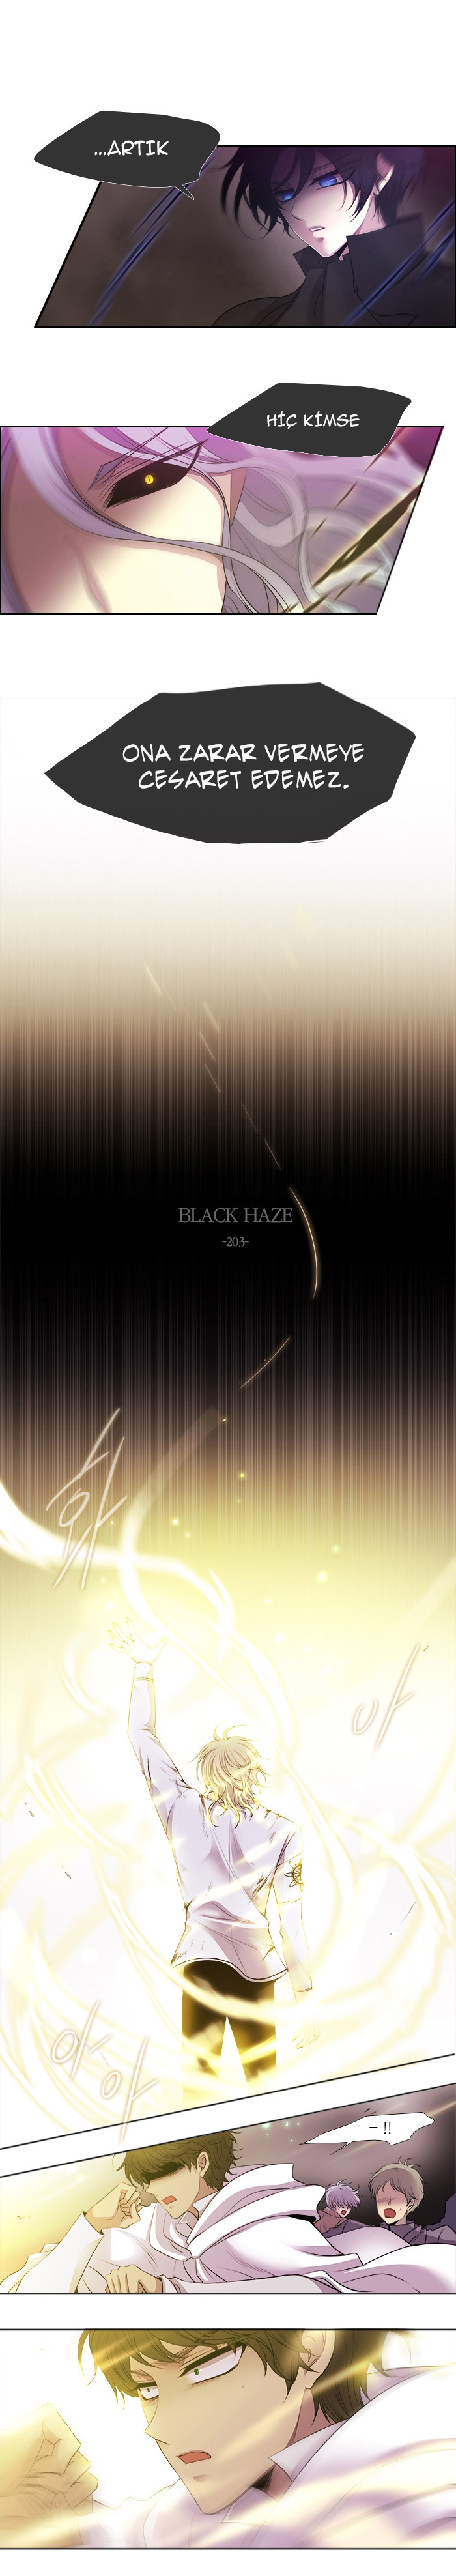 Black Haze: Chapter 203 - Page 4